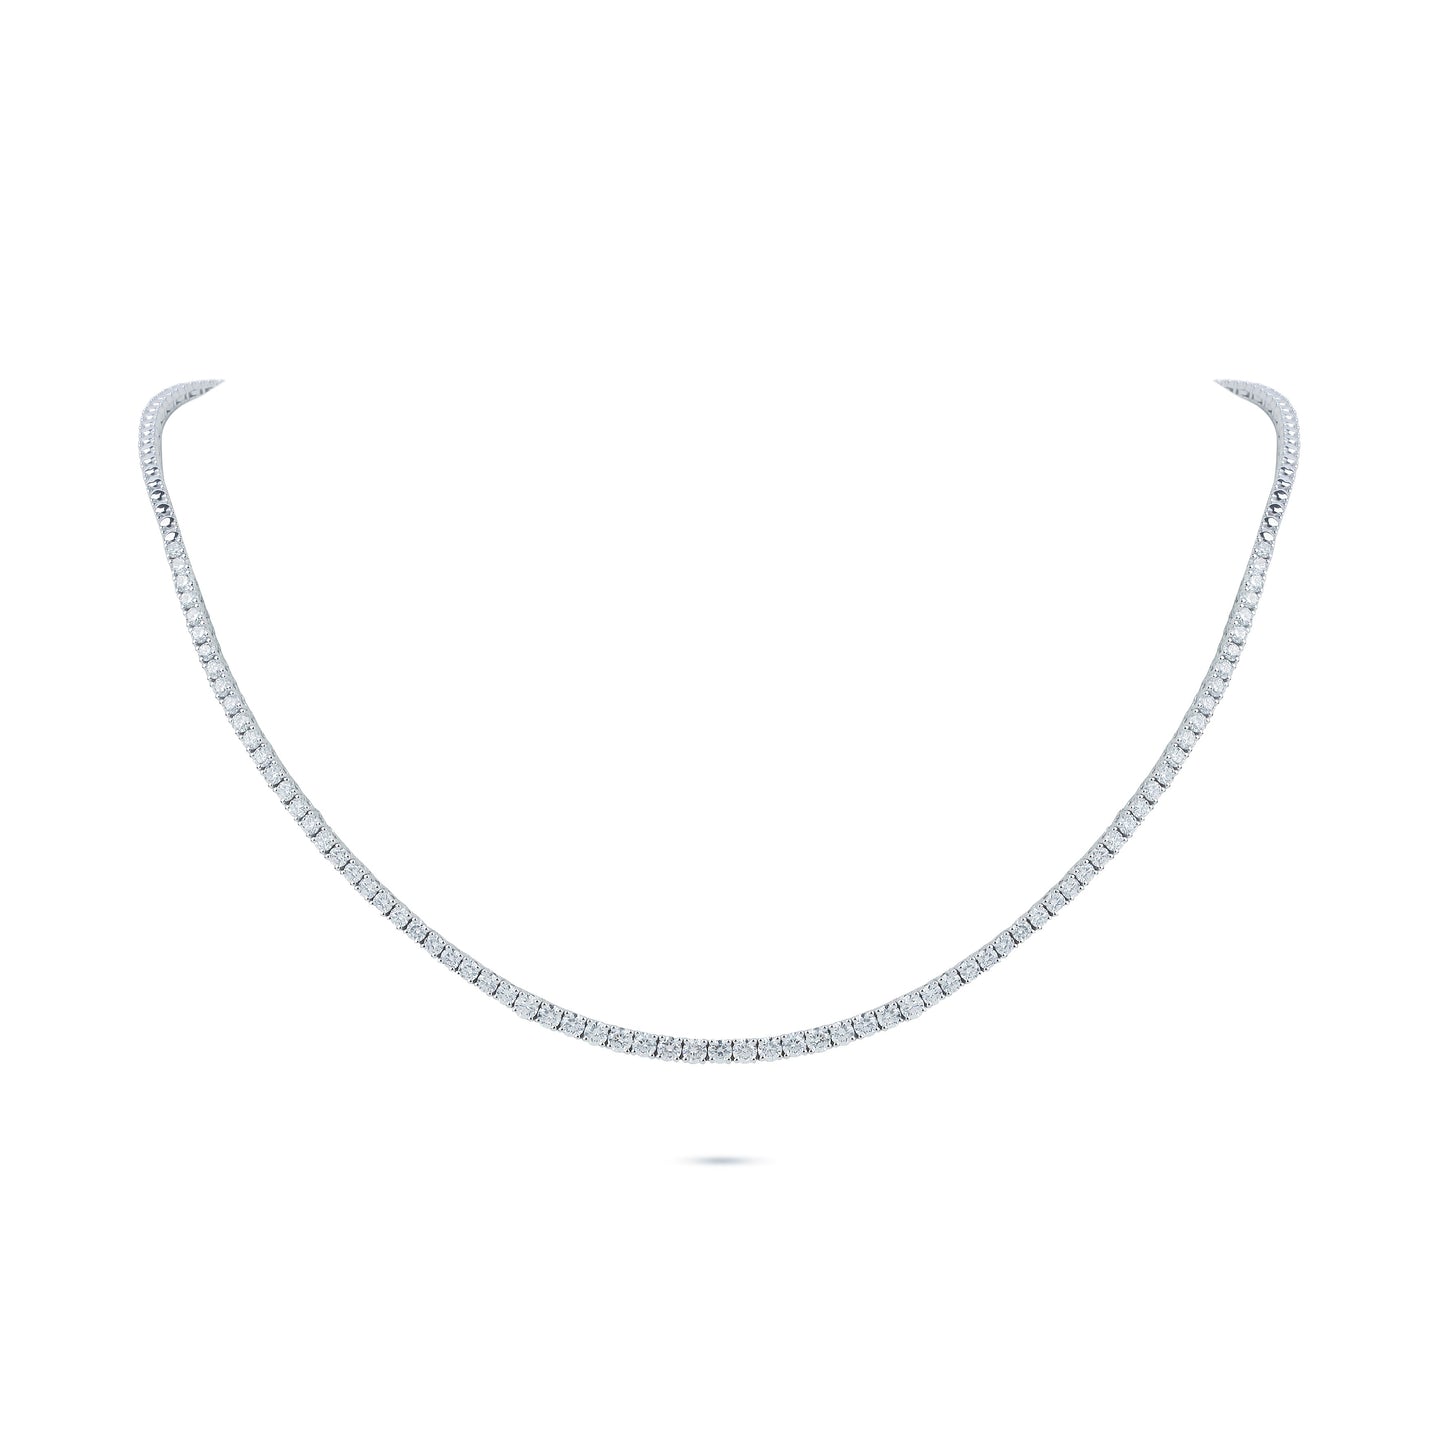 3.62 Carats Diamond Tennis Necklace